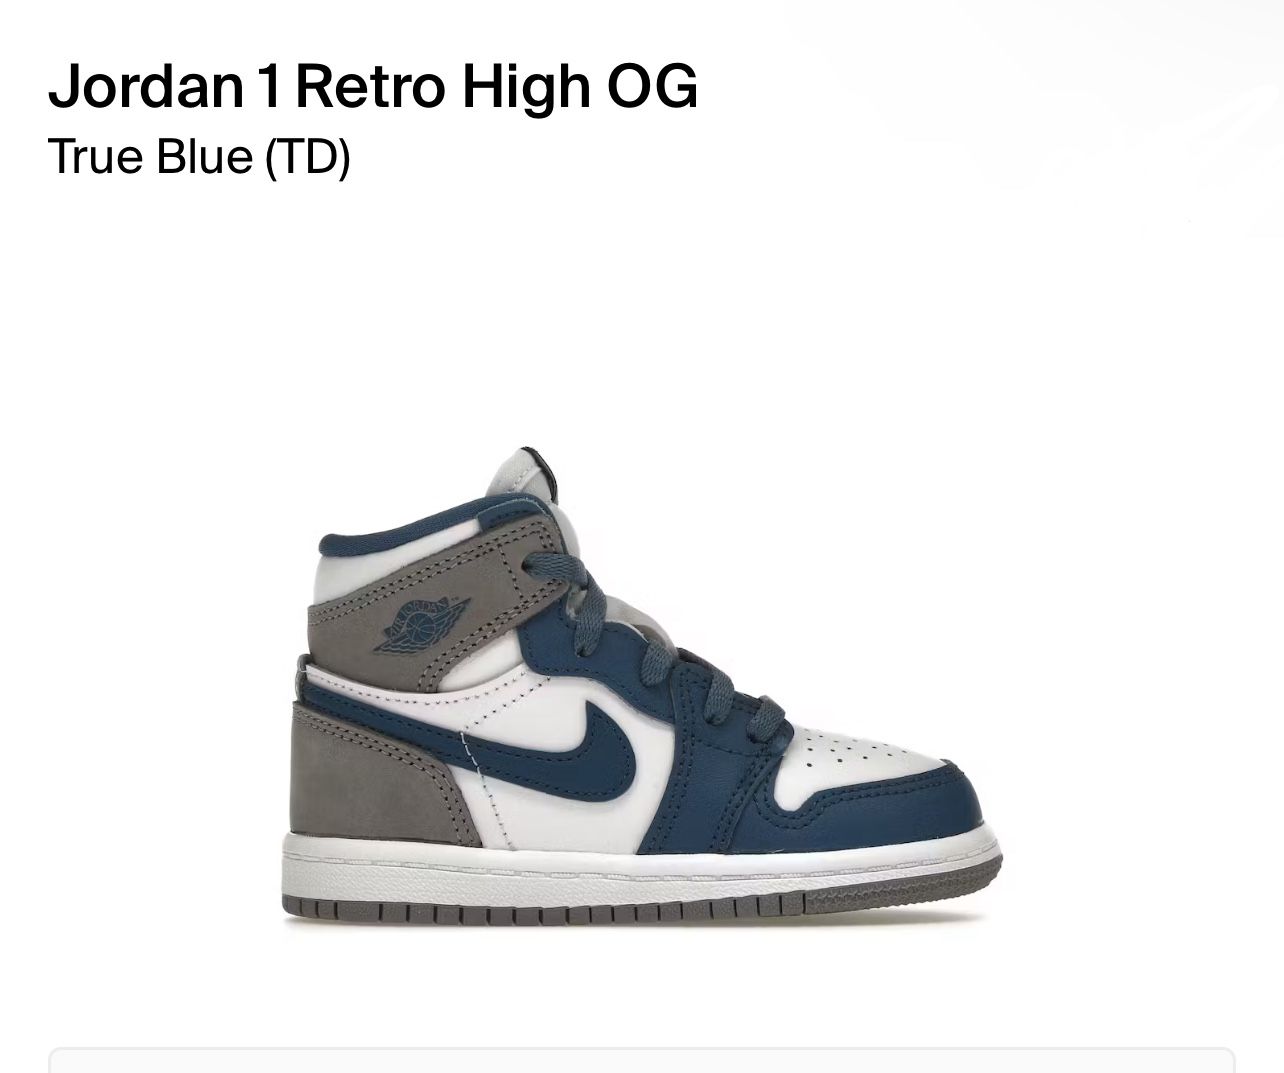 Jordan 1 Retro High OG